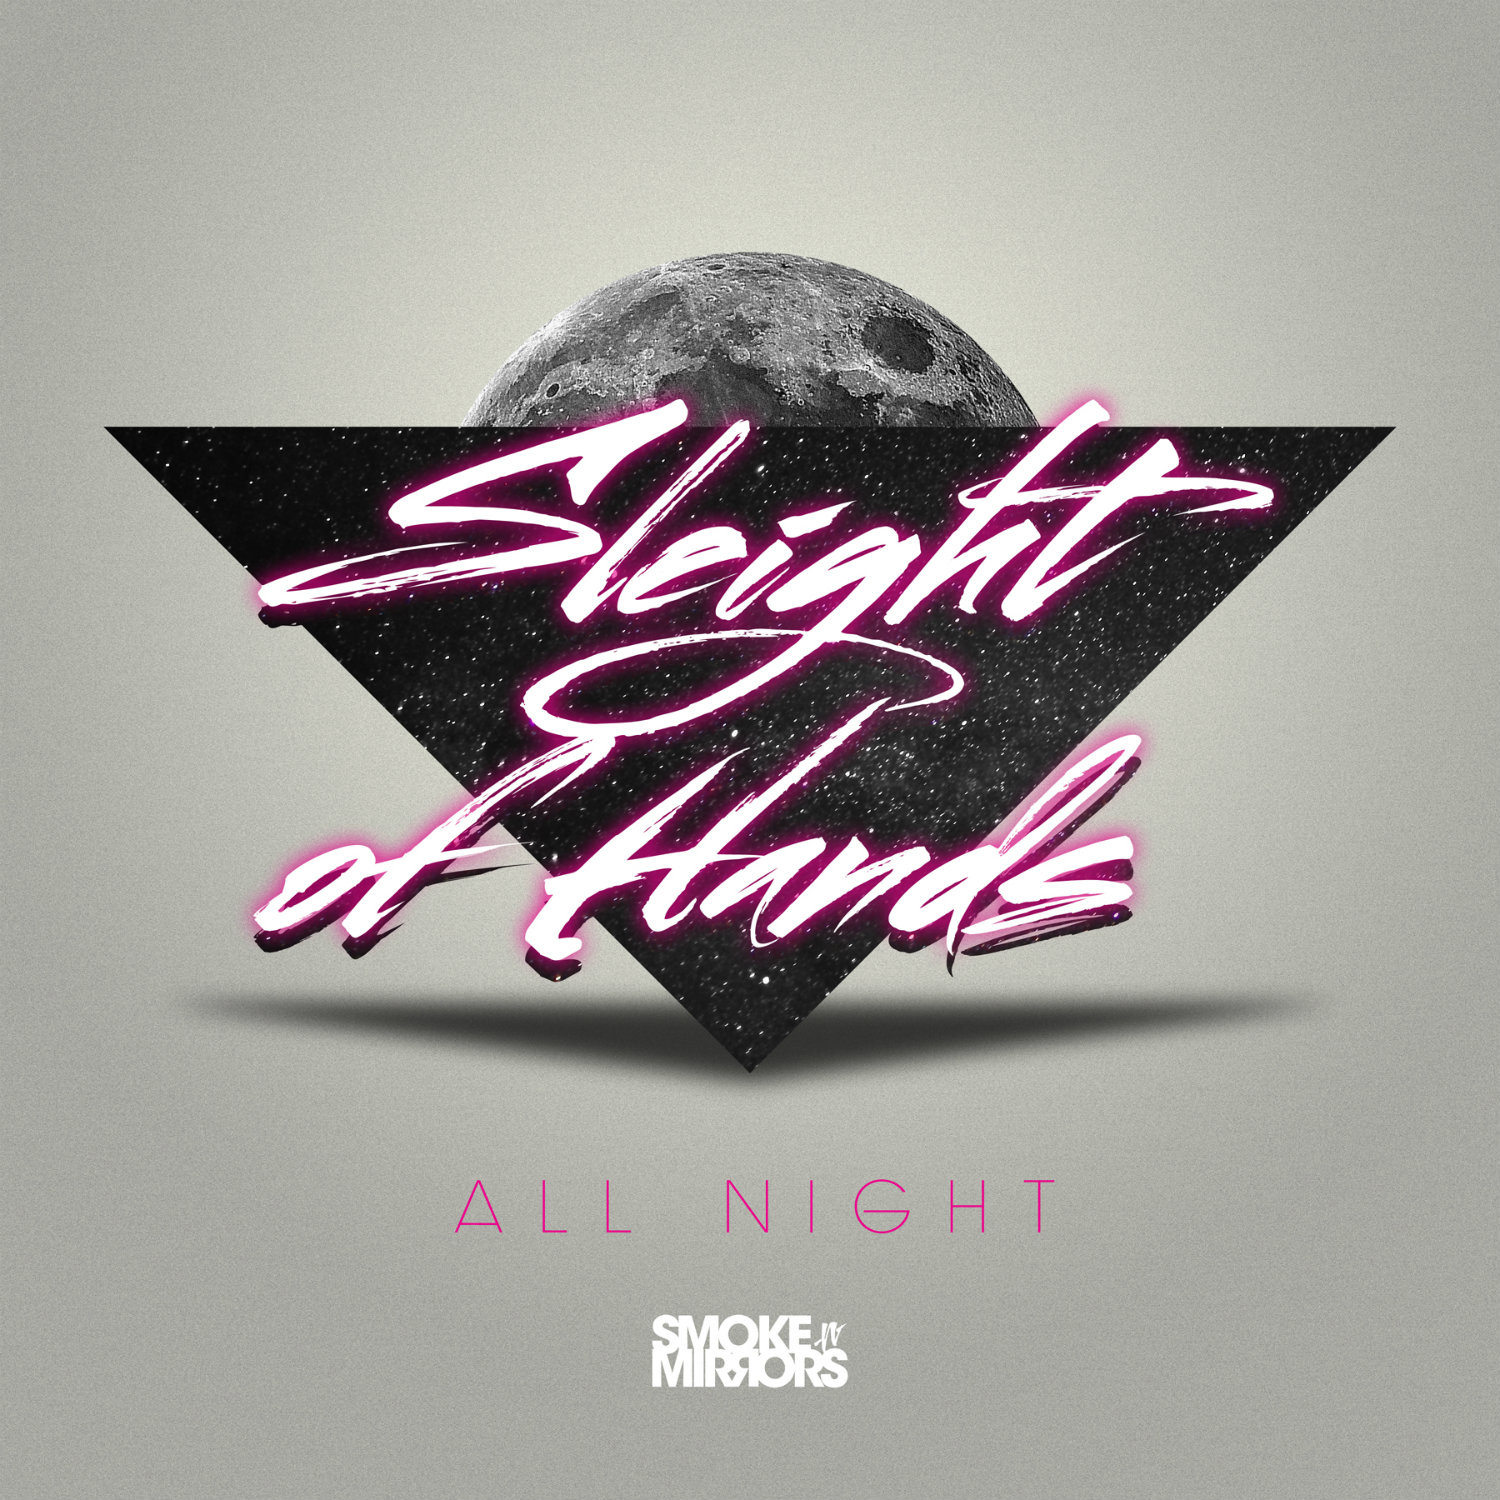 Sleight of Hands - All Night